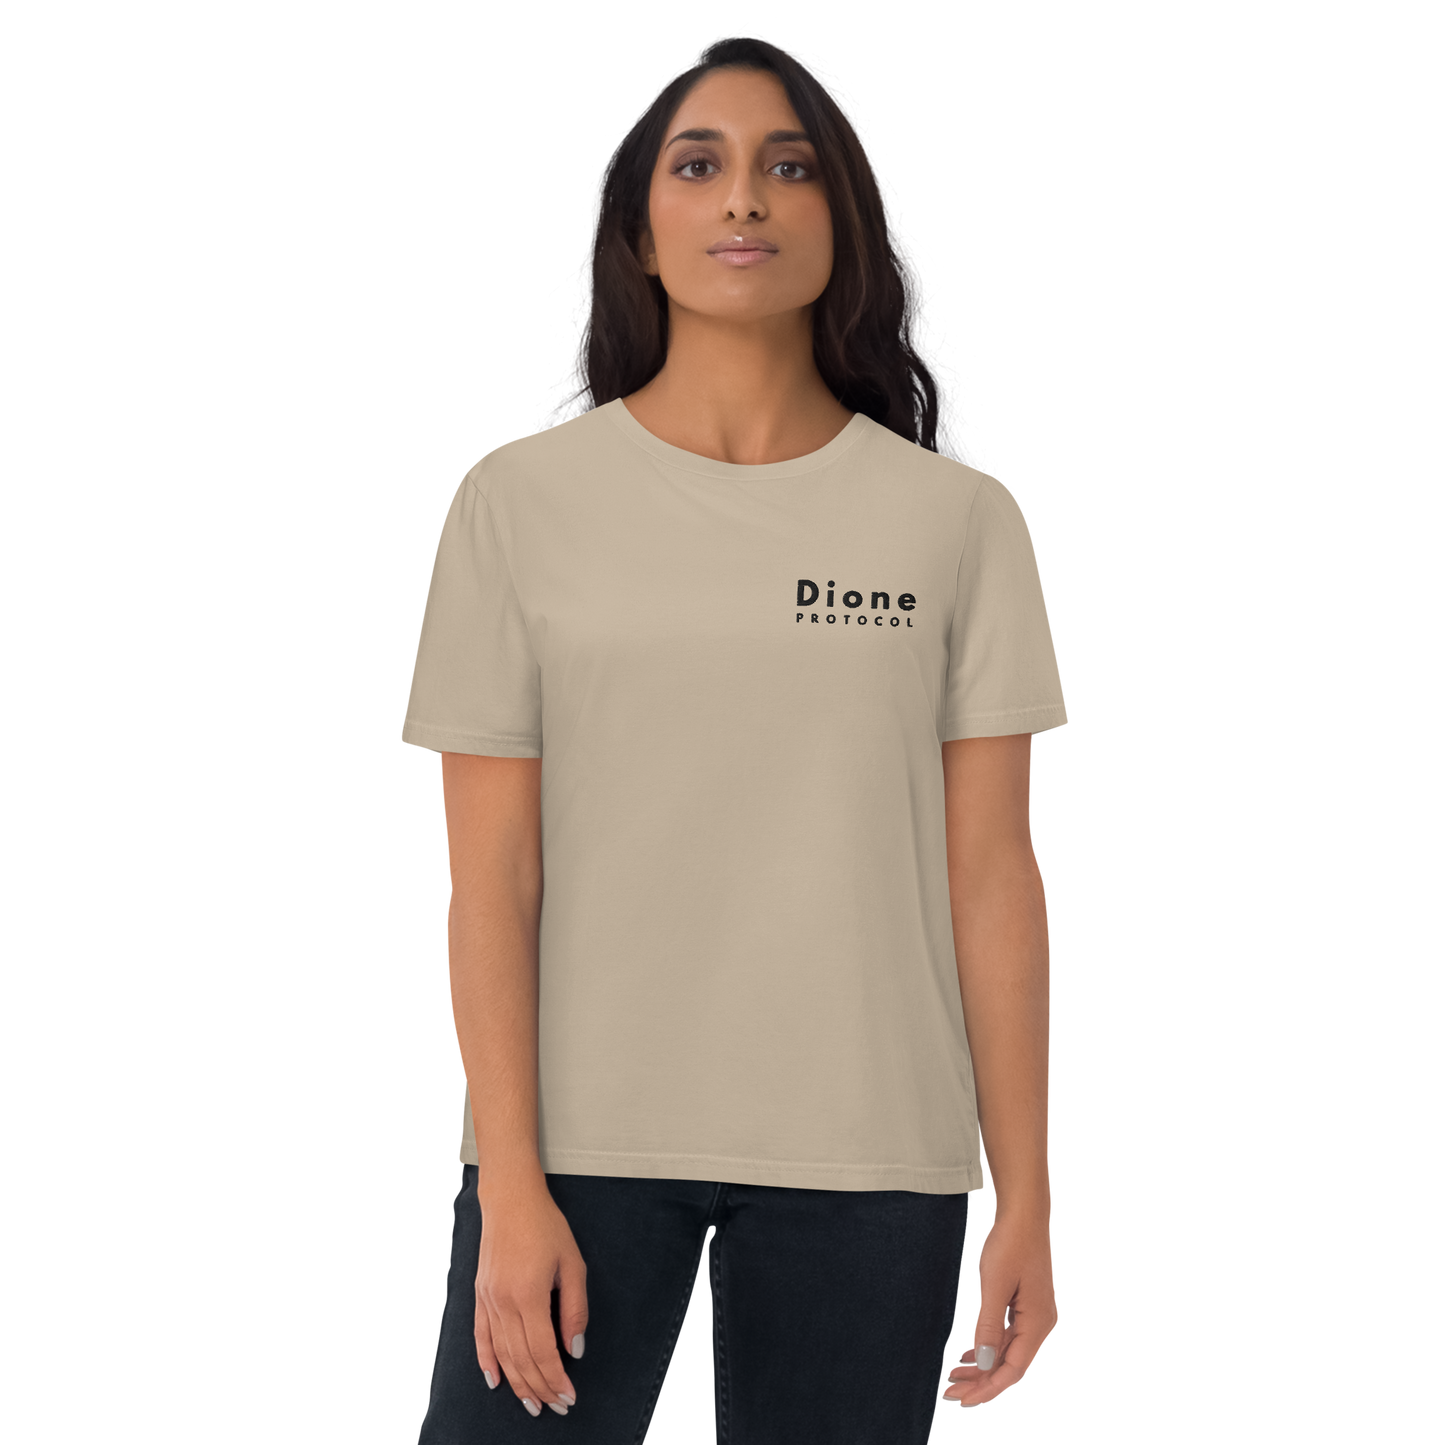 T-Shirt - Dione V1.0 - Desert Dust - Premium